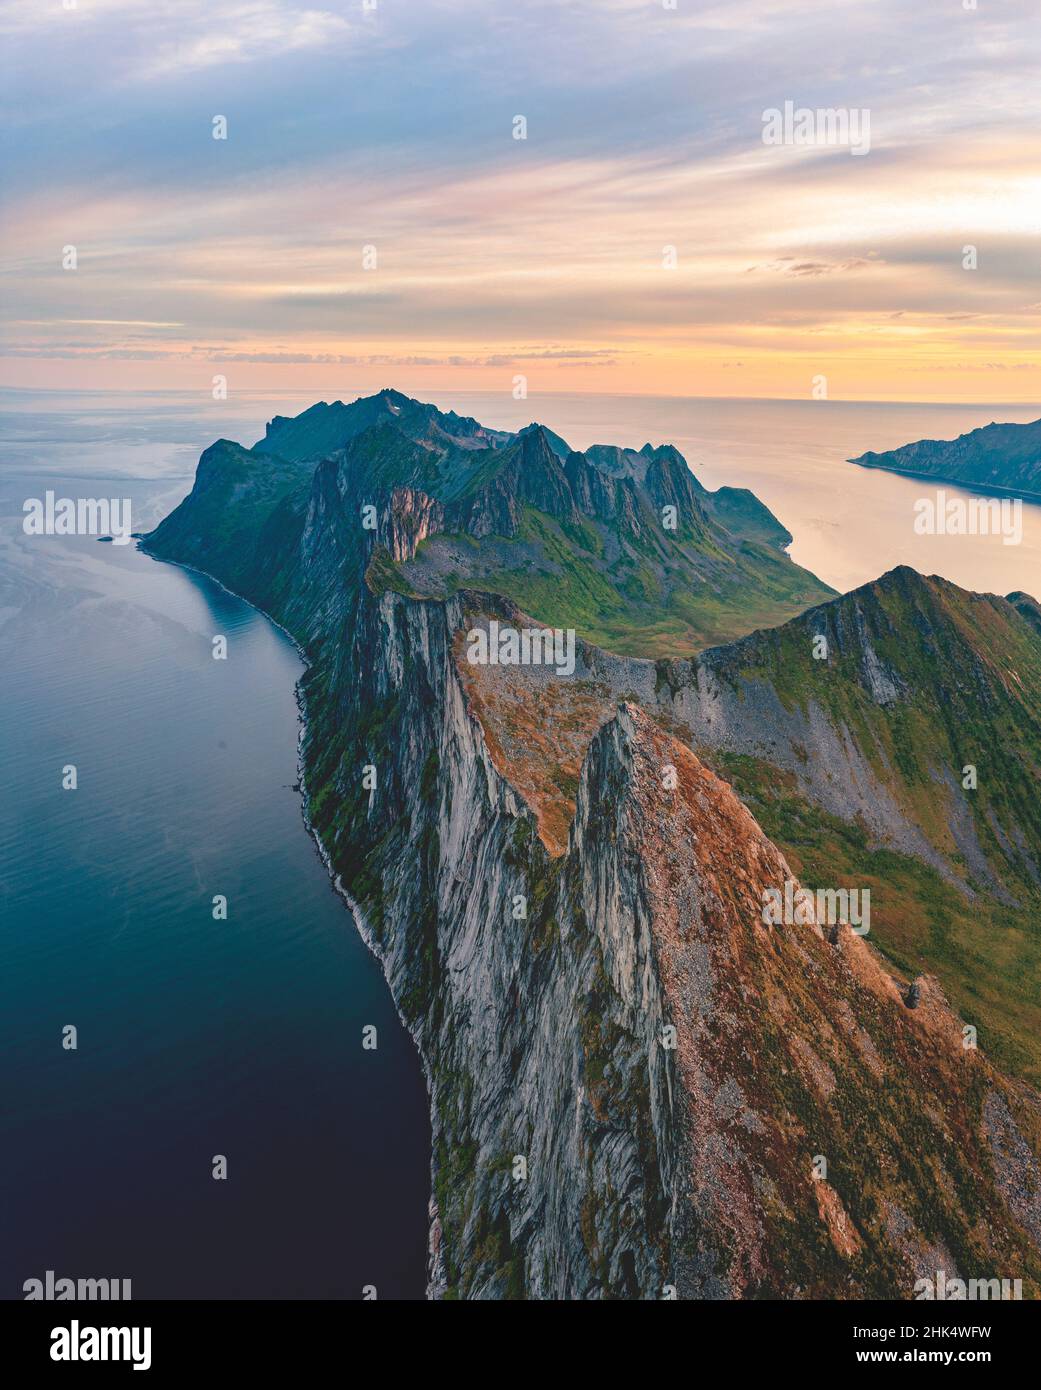 Panoramica dei monti Segla, Hesten e Inste Kongen all'alba, isola di Senja, contea di Troms, Norvegia, Scandinavia, Europa Foto Stock